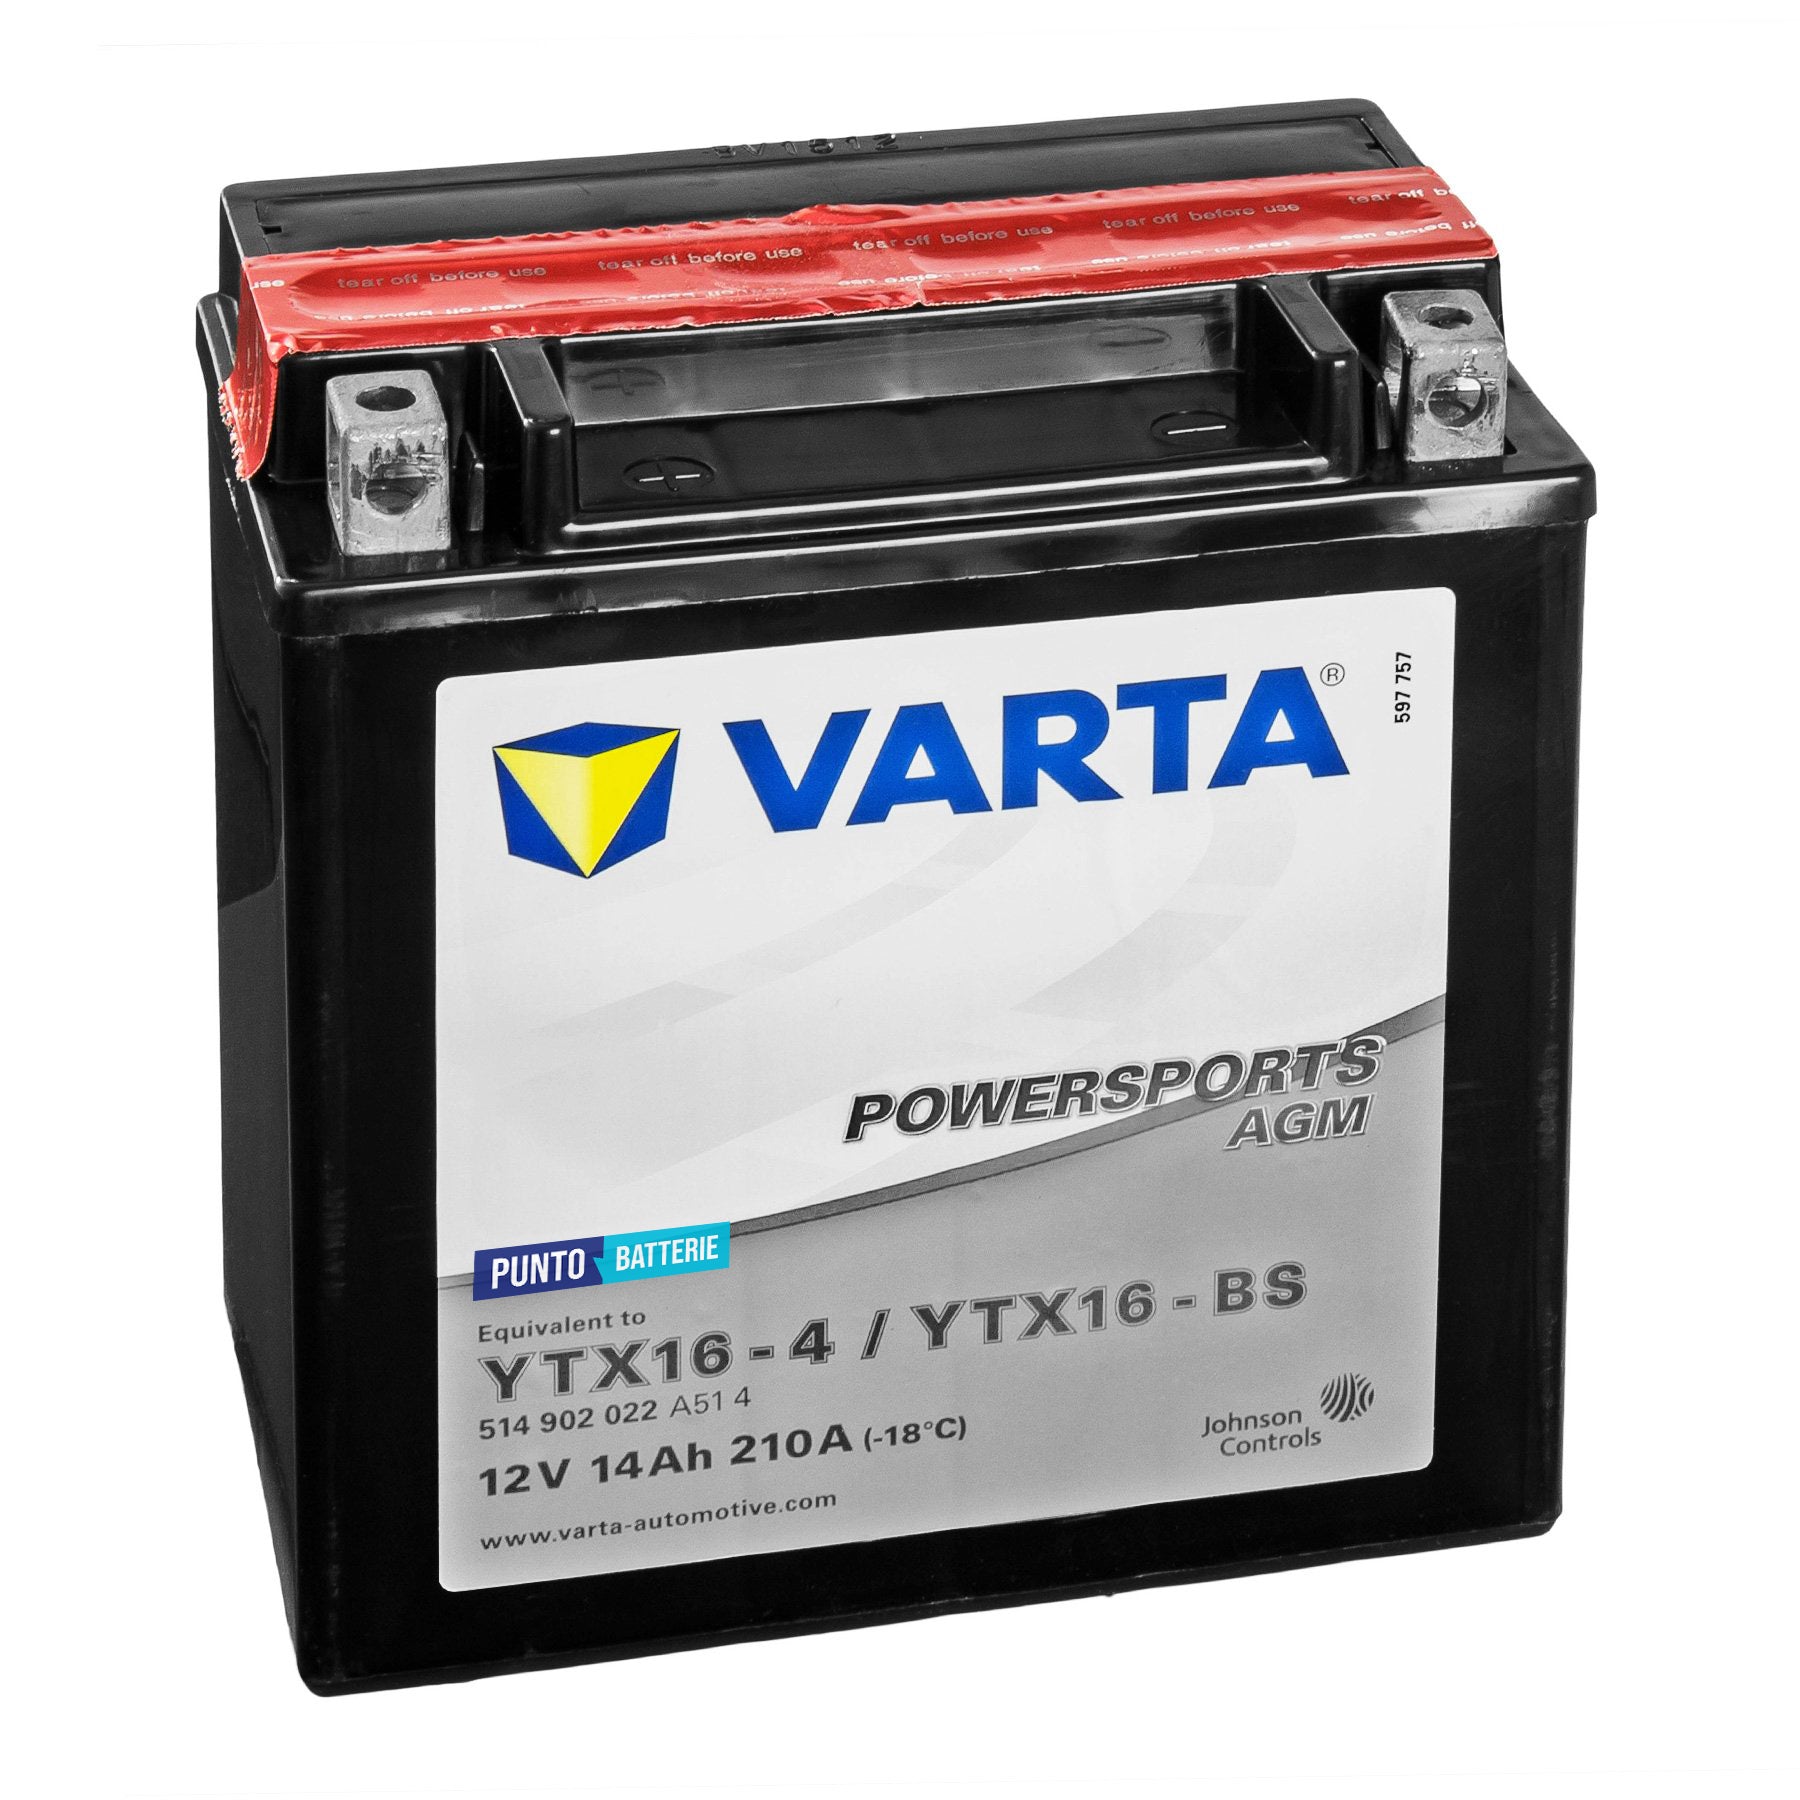 Batteria originale Varta Powersport AGM YTX16-4, dimensioni 152 x 88 x 131, polo positivo a sinistra, 12 volt, 14 amperora, 210 ampere. Batteria per moto, scooter e powersport.